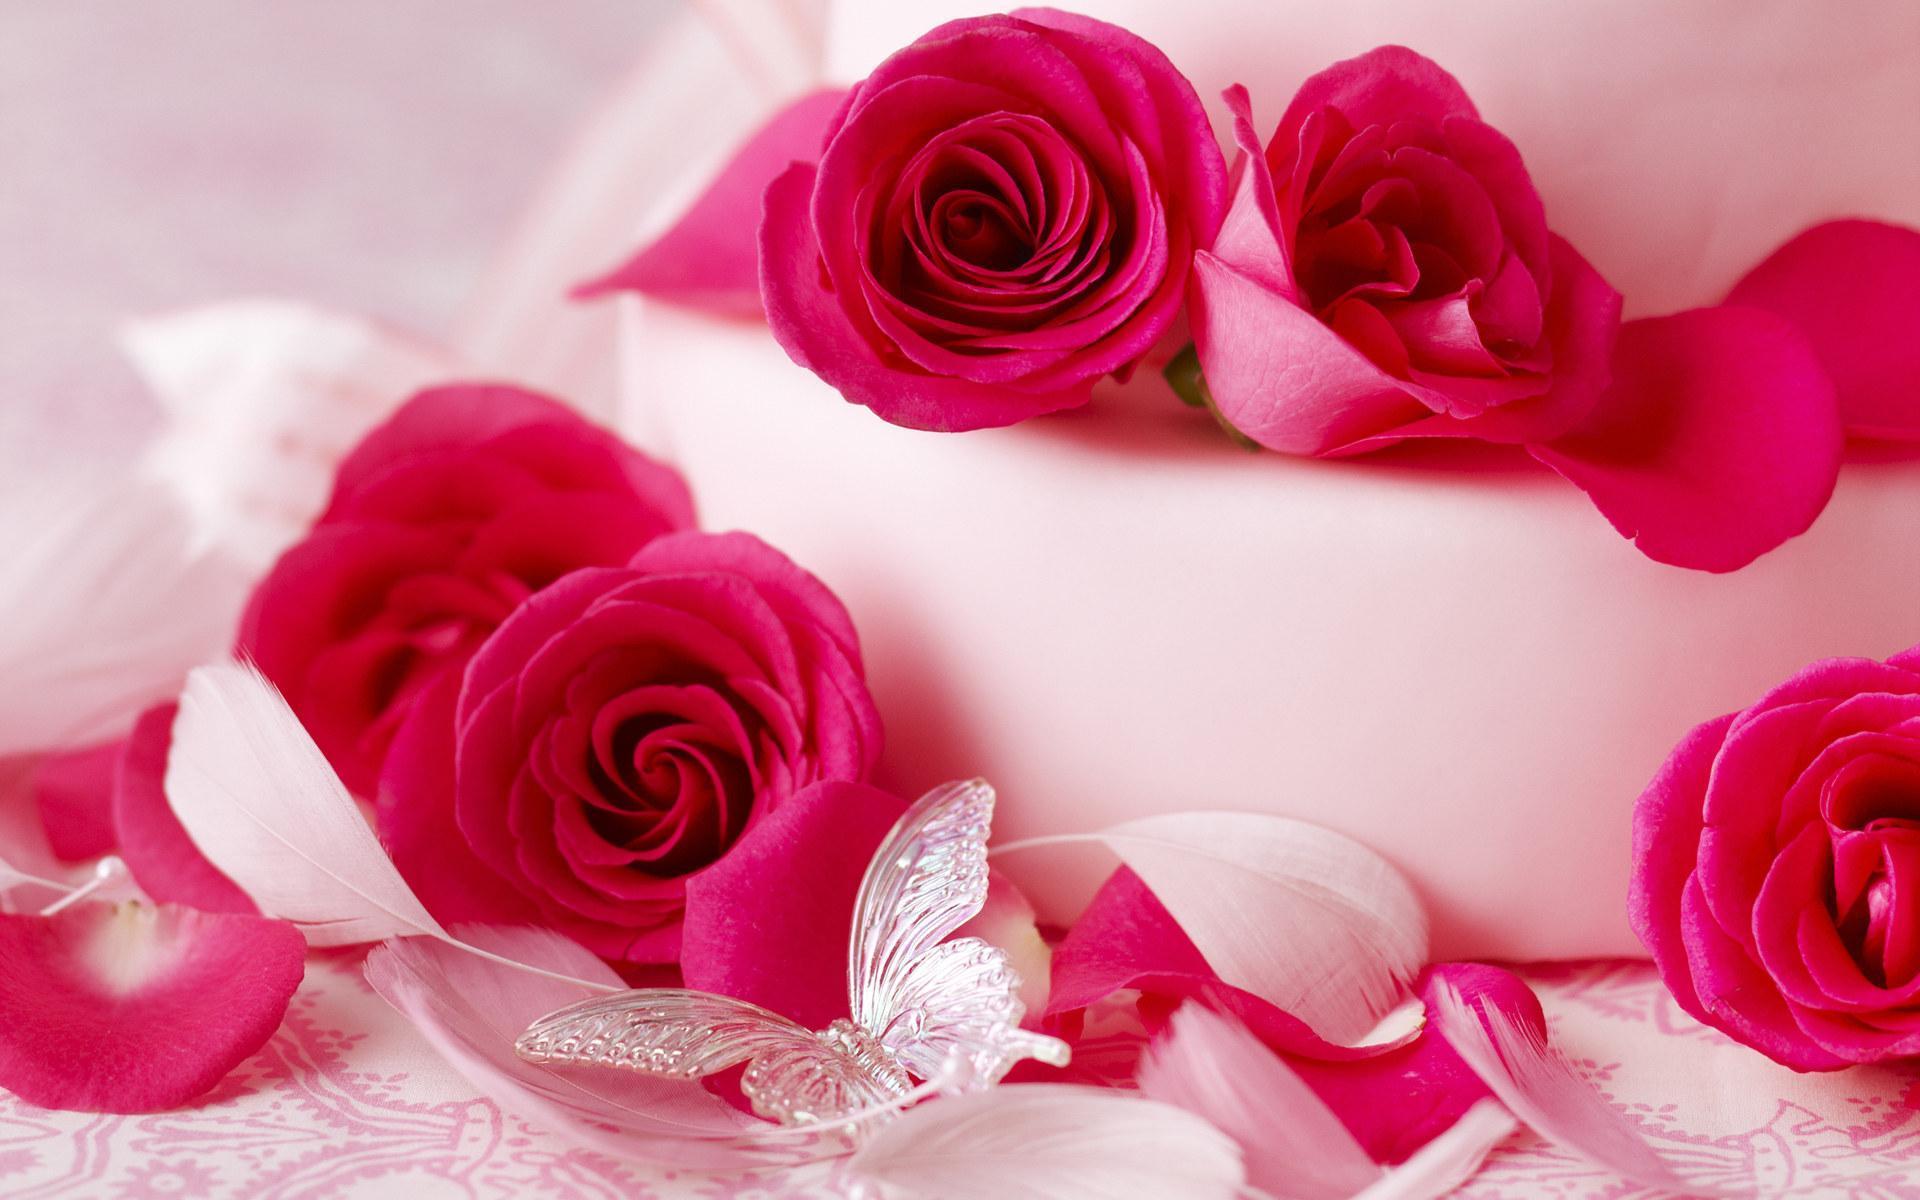 Romantic-Roses-roses-13966416-1920-1200.jpg